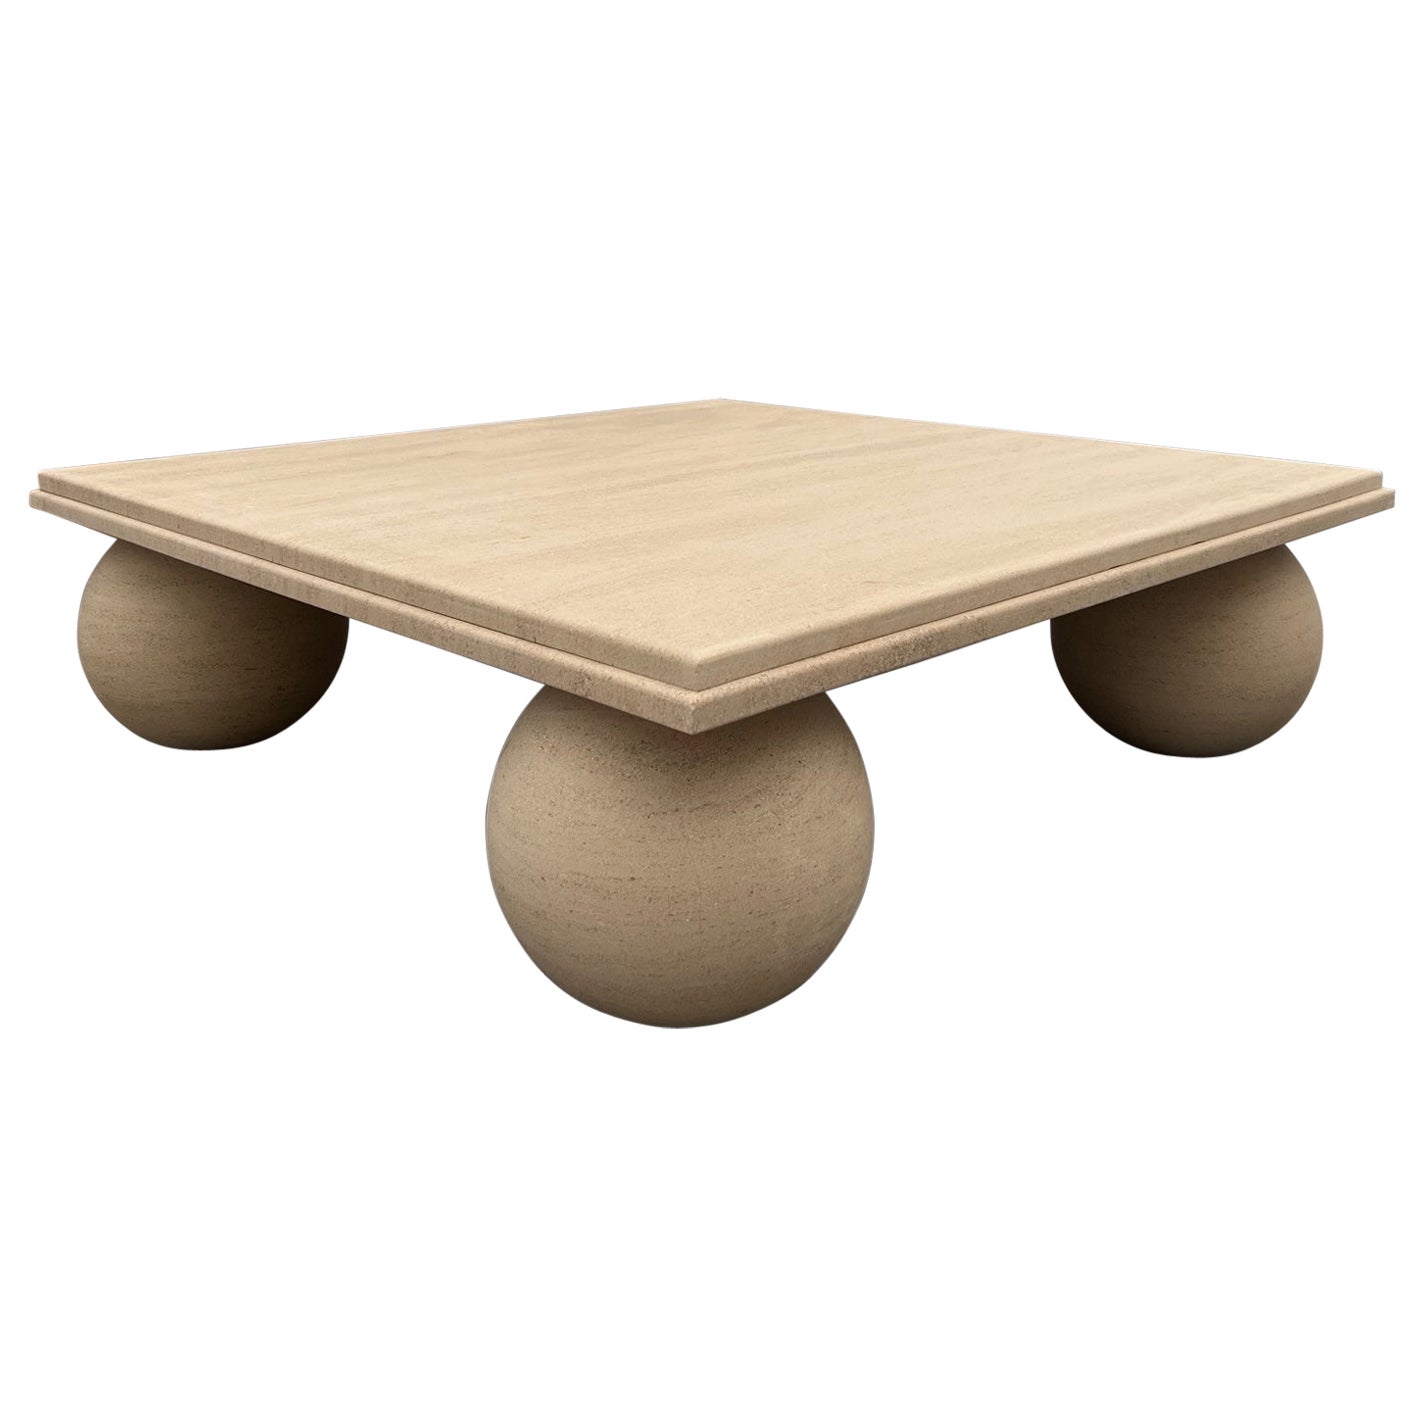 Square Stone Coffee Table with Ball Sphere Base in Cream Portuguese Travertine